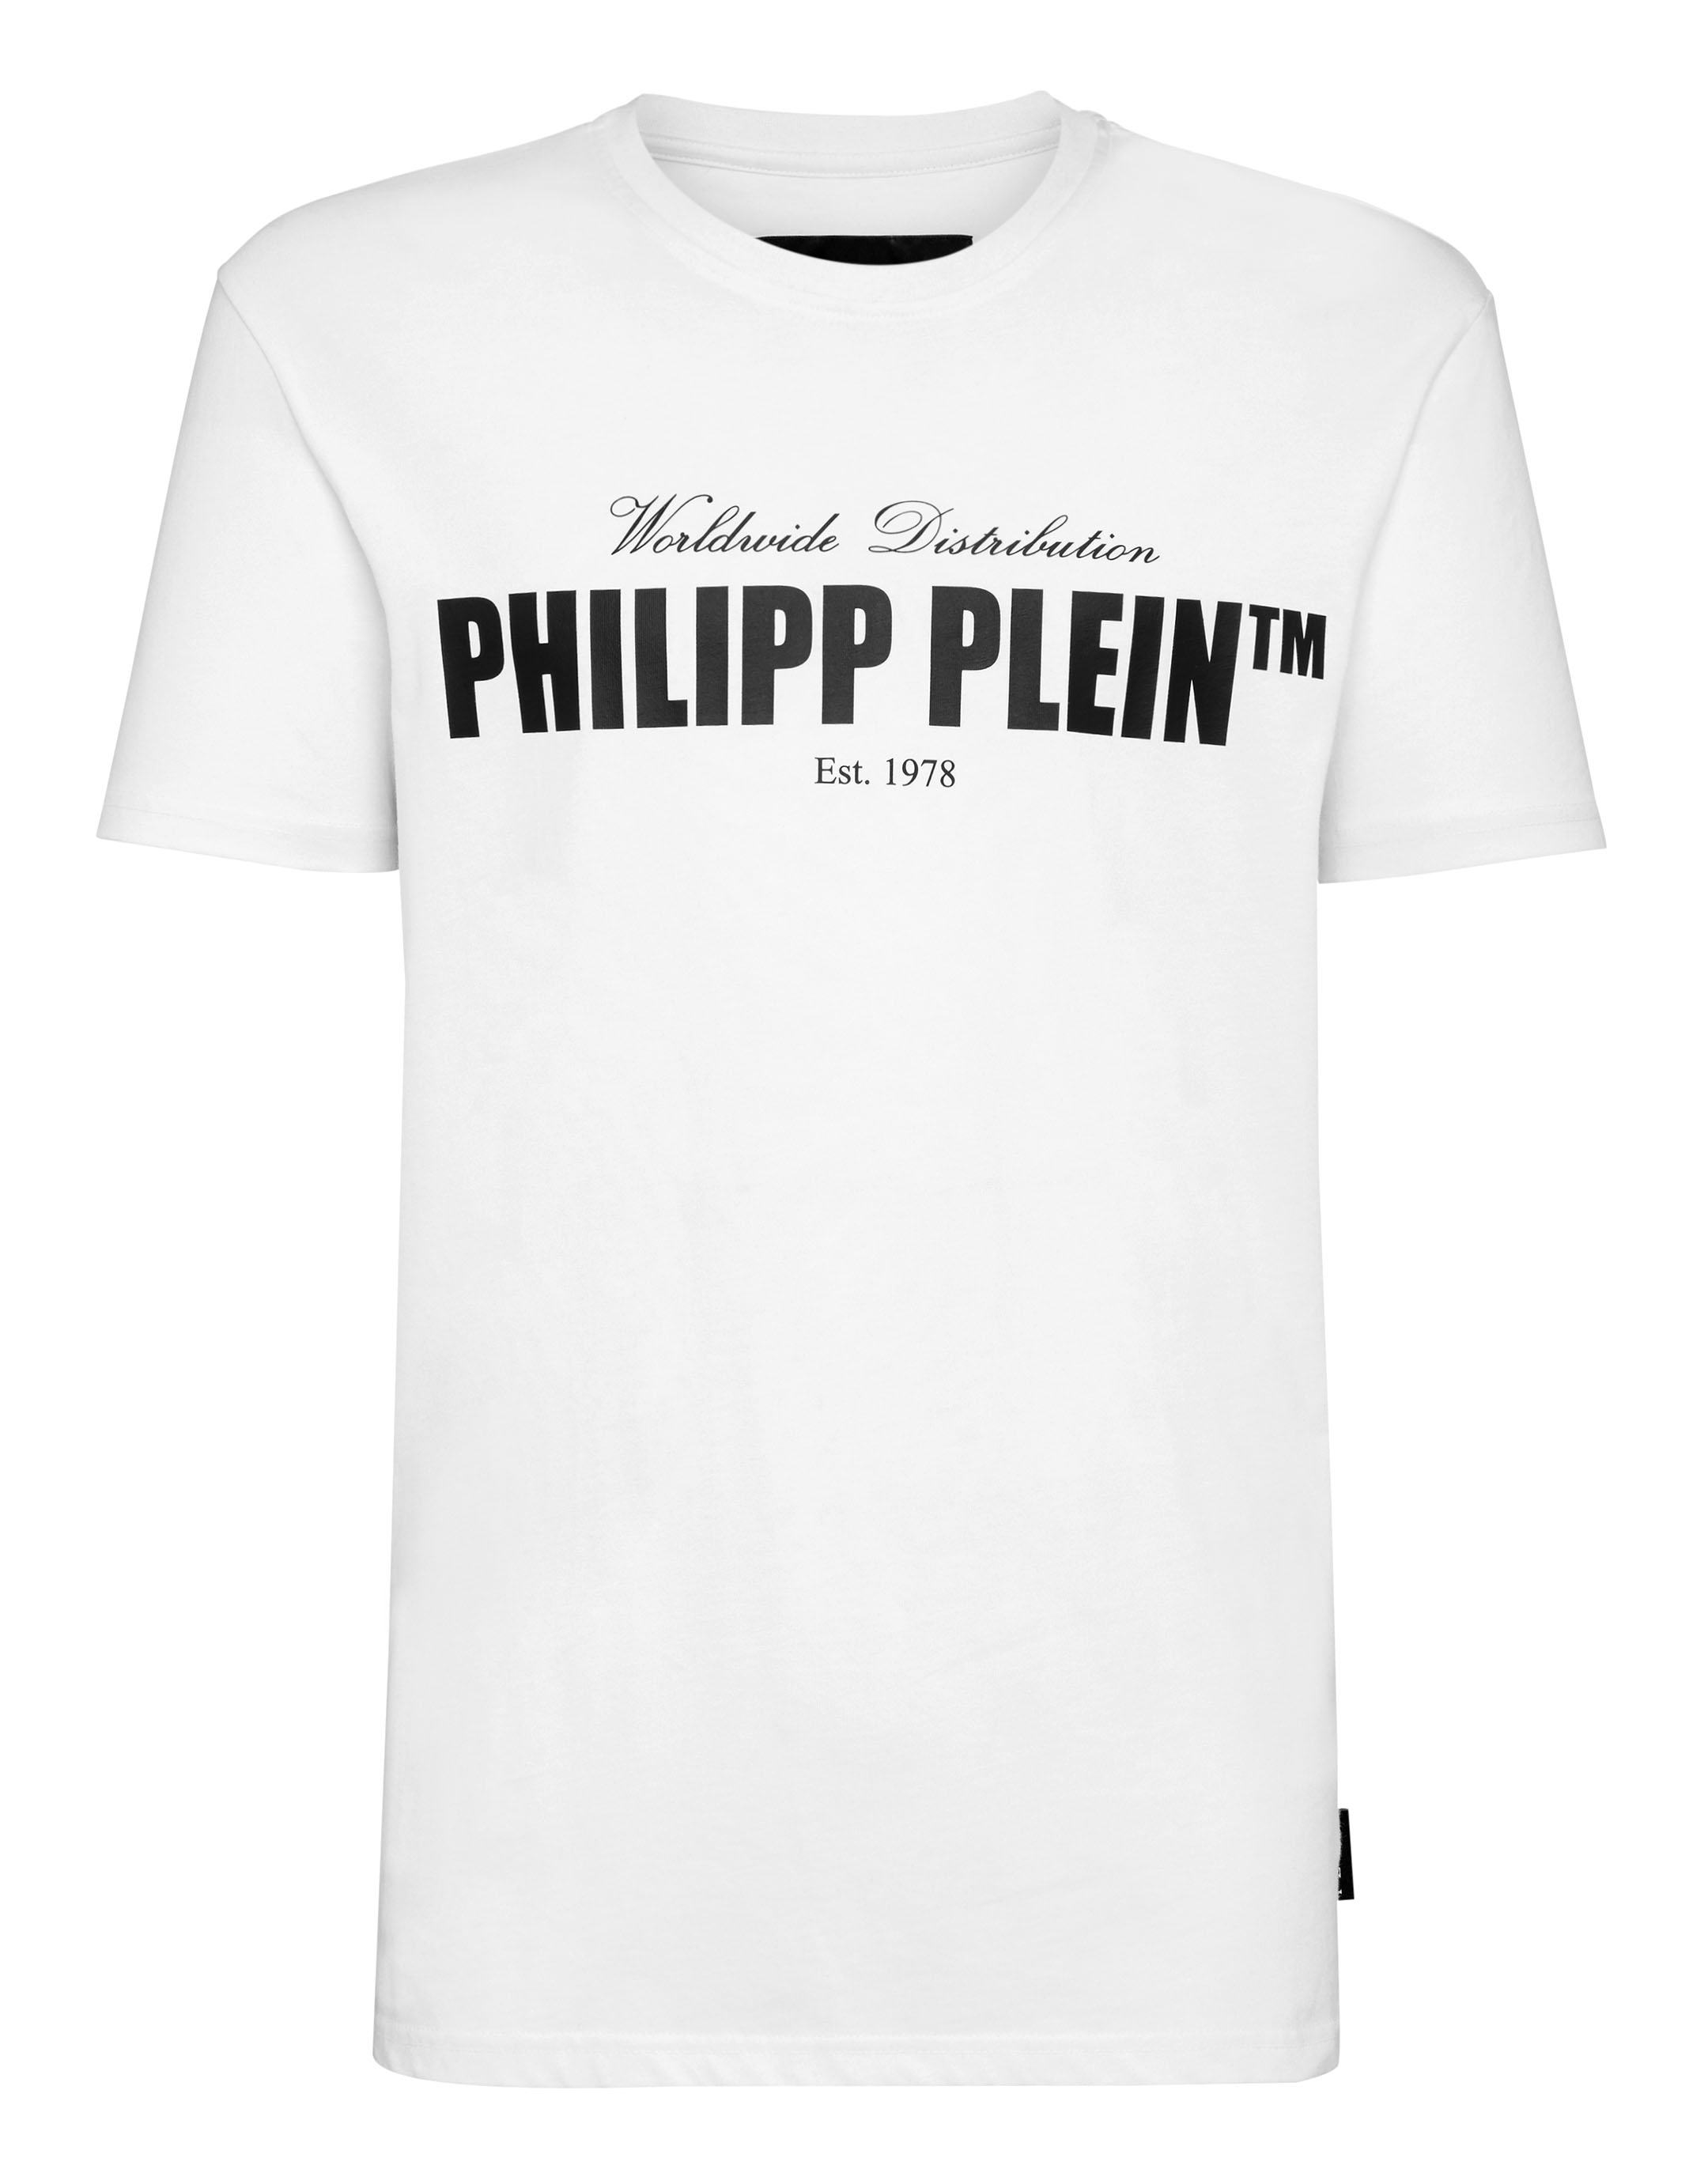 philipp plein black shirt